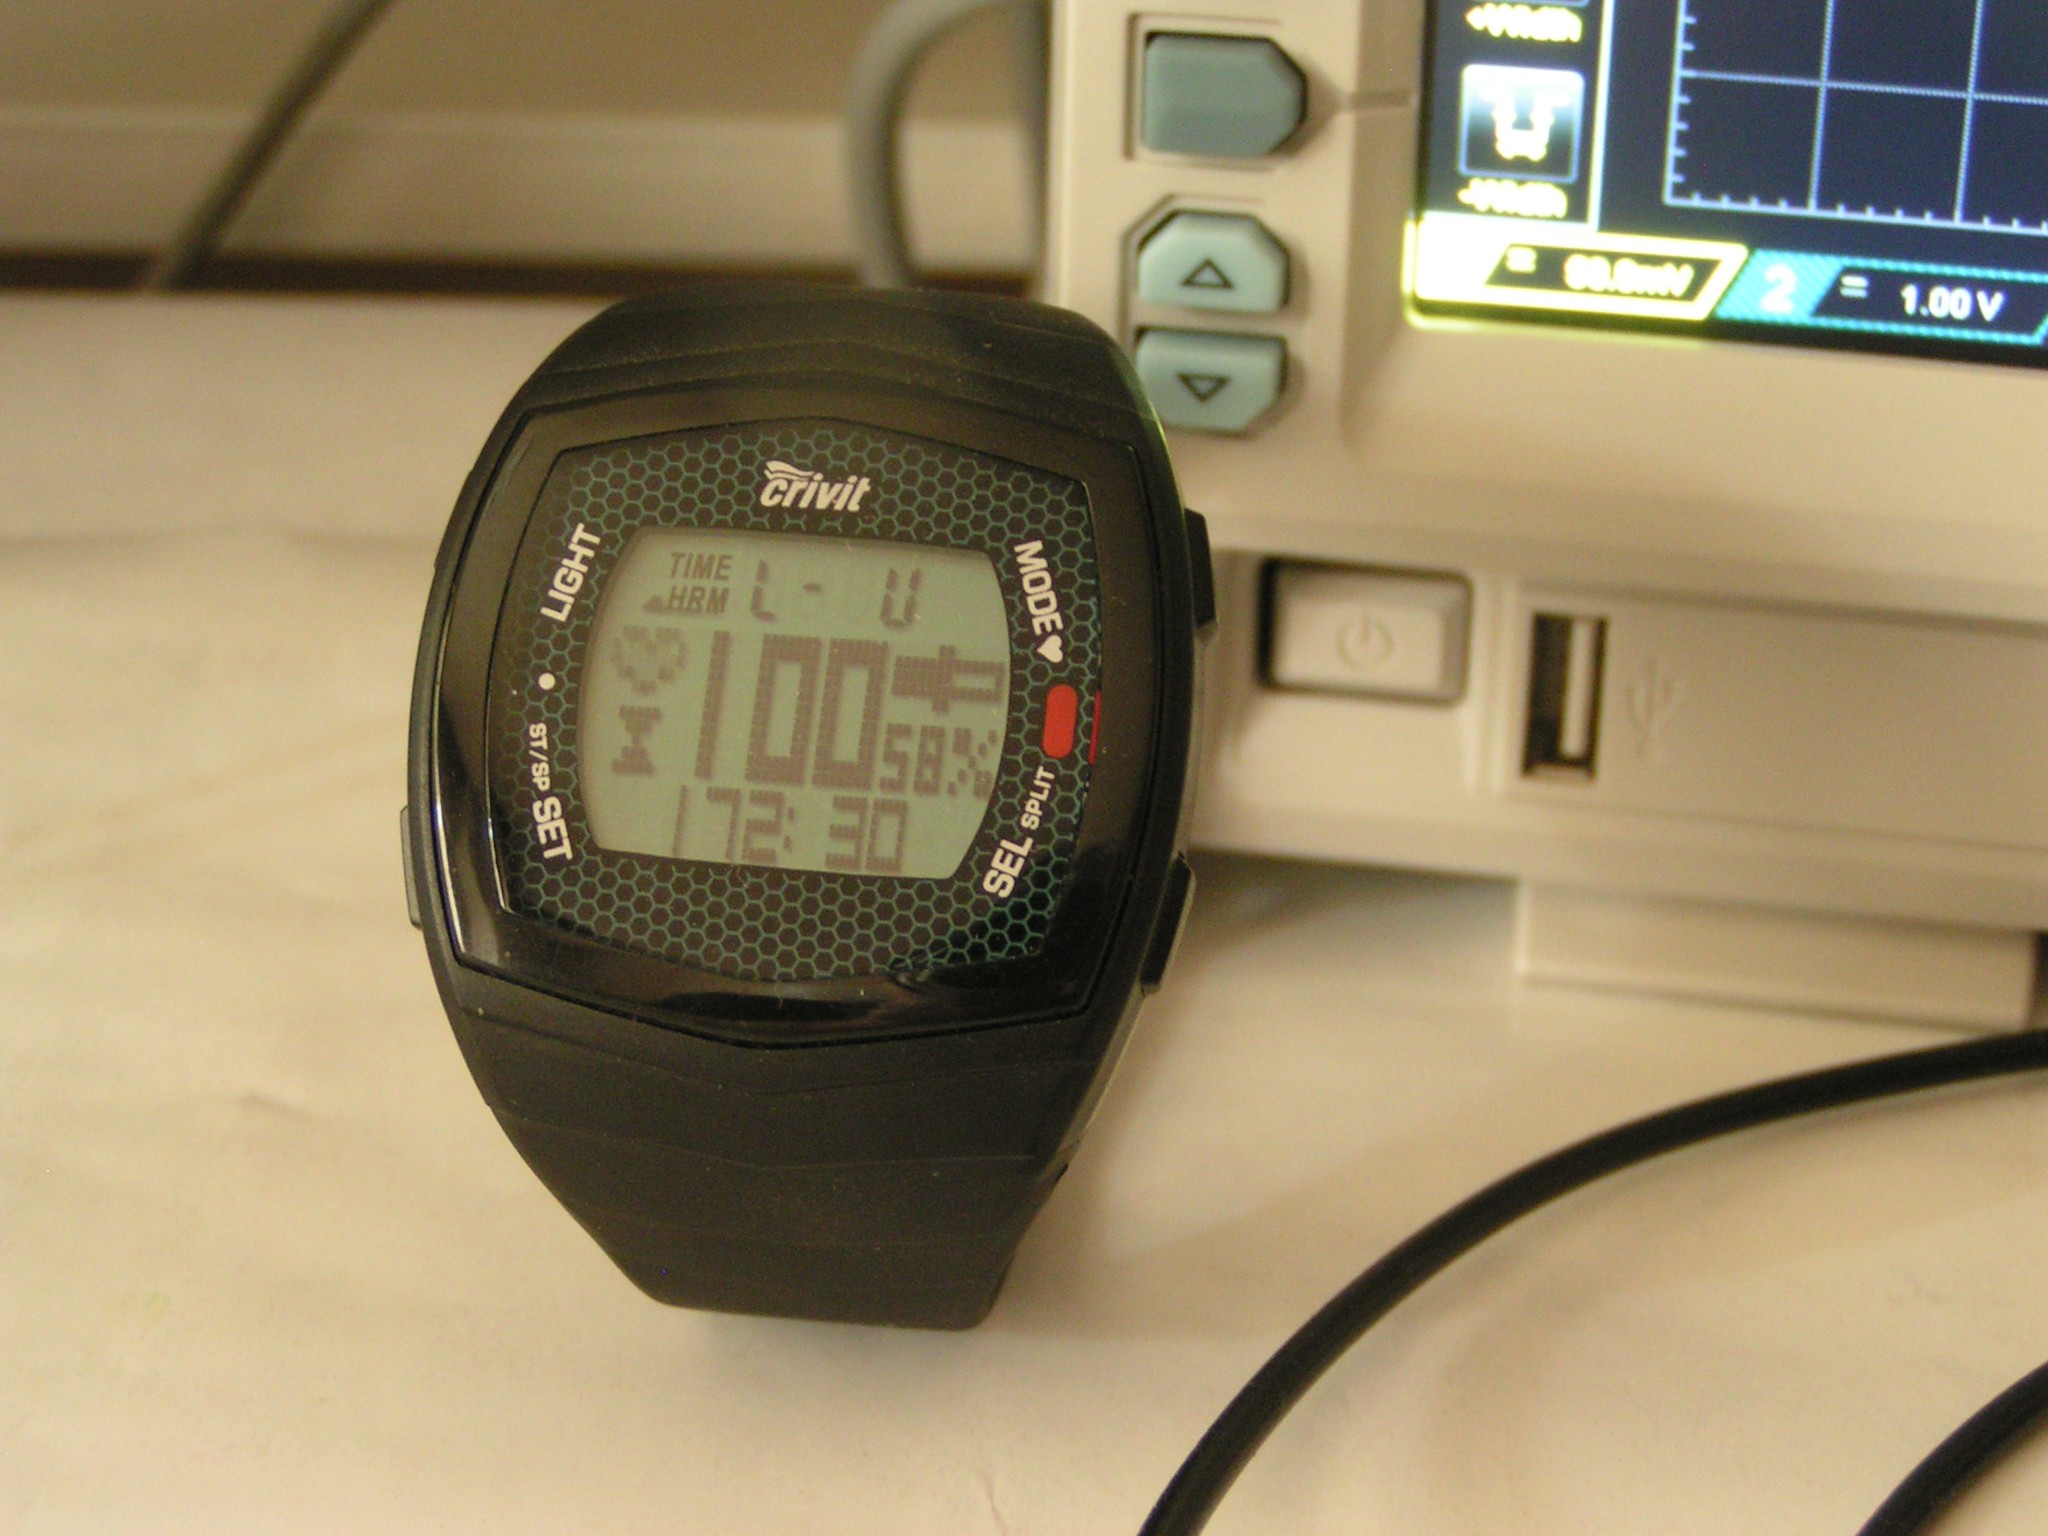 Sniff the Wireless Data of a Sports Wrist Watch